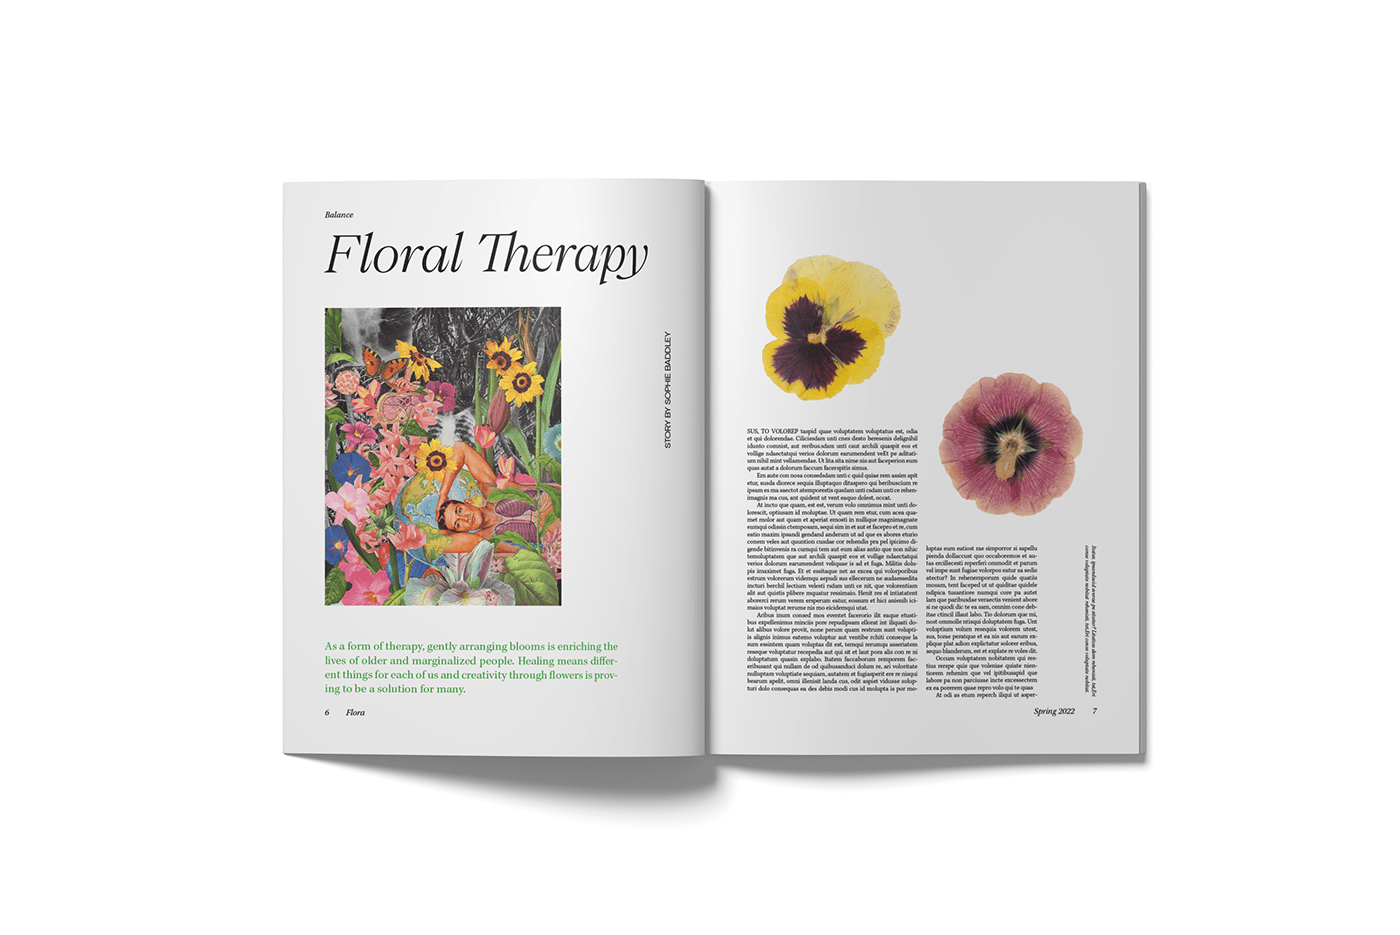 editorial Flora Floral design Floral Magazine flower flower magazine Flowers magazine rebranding redesign